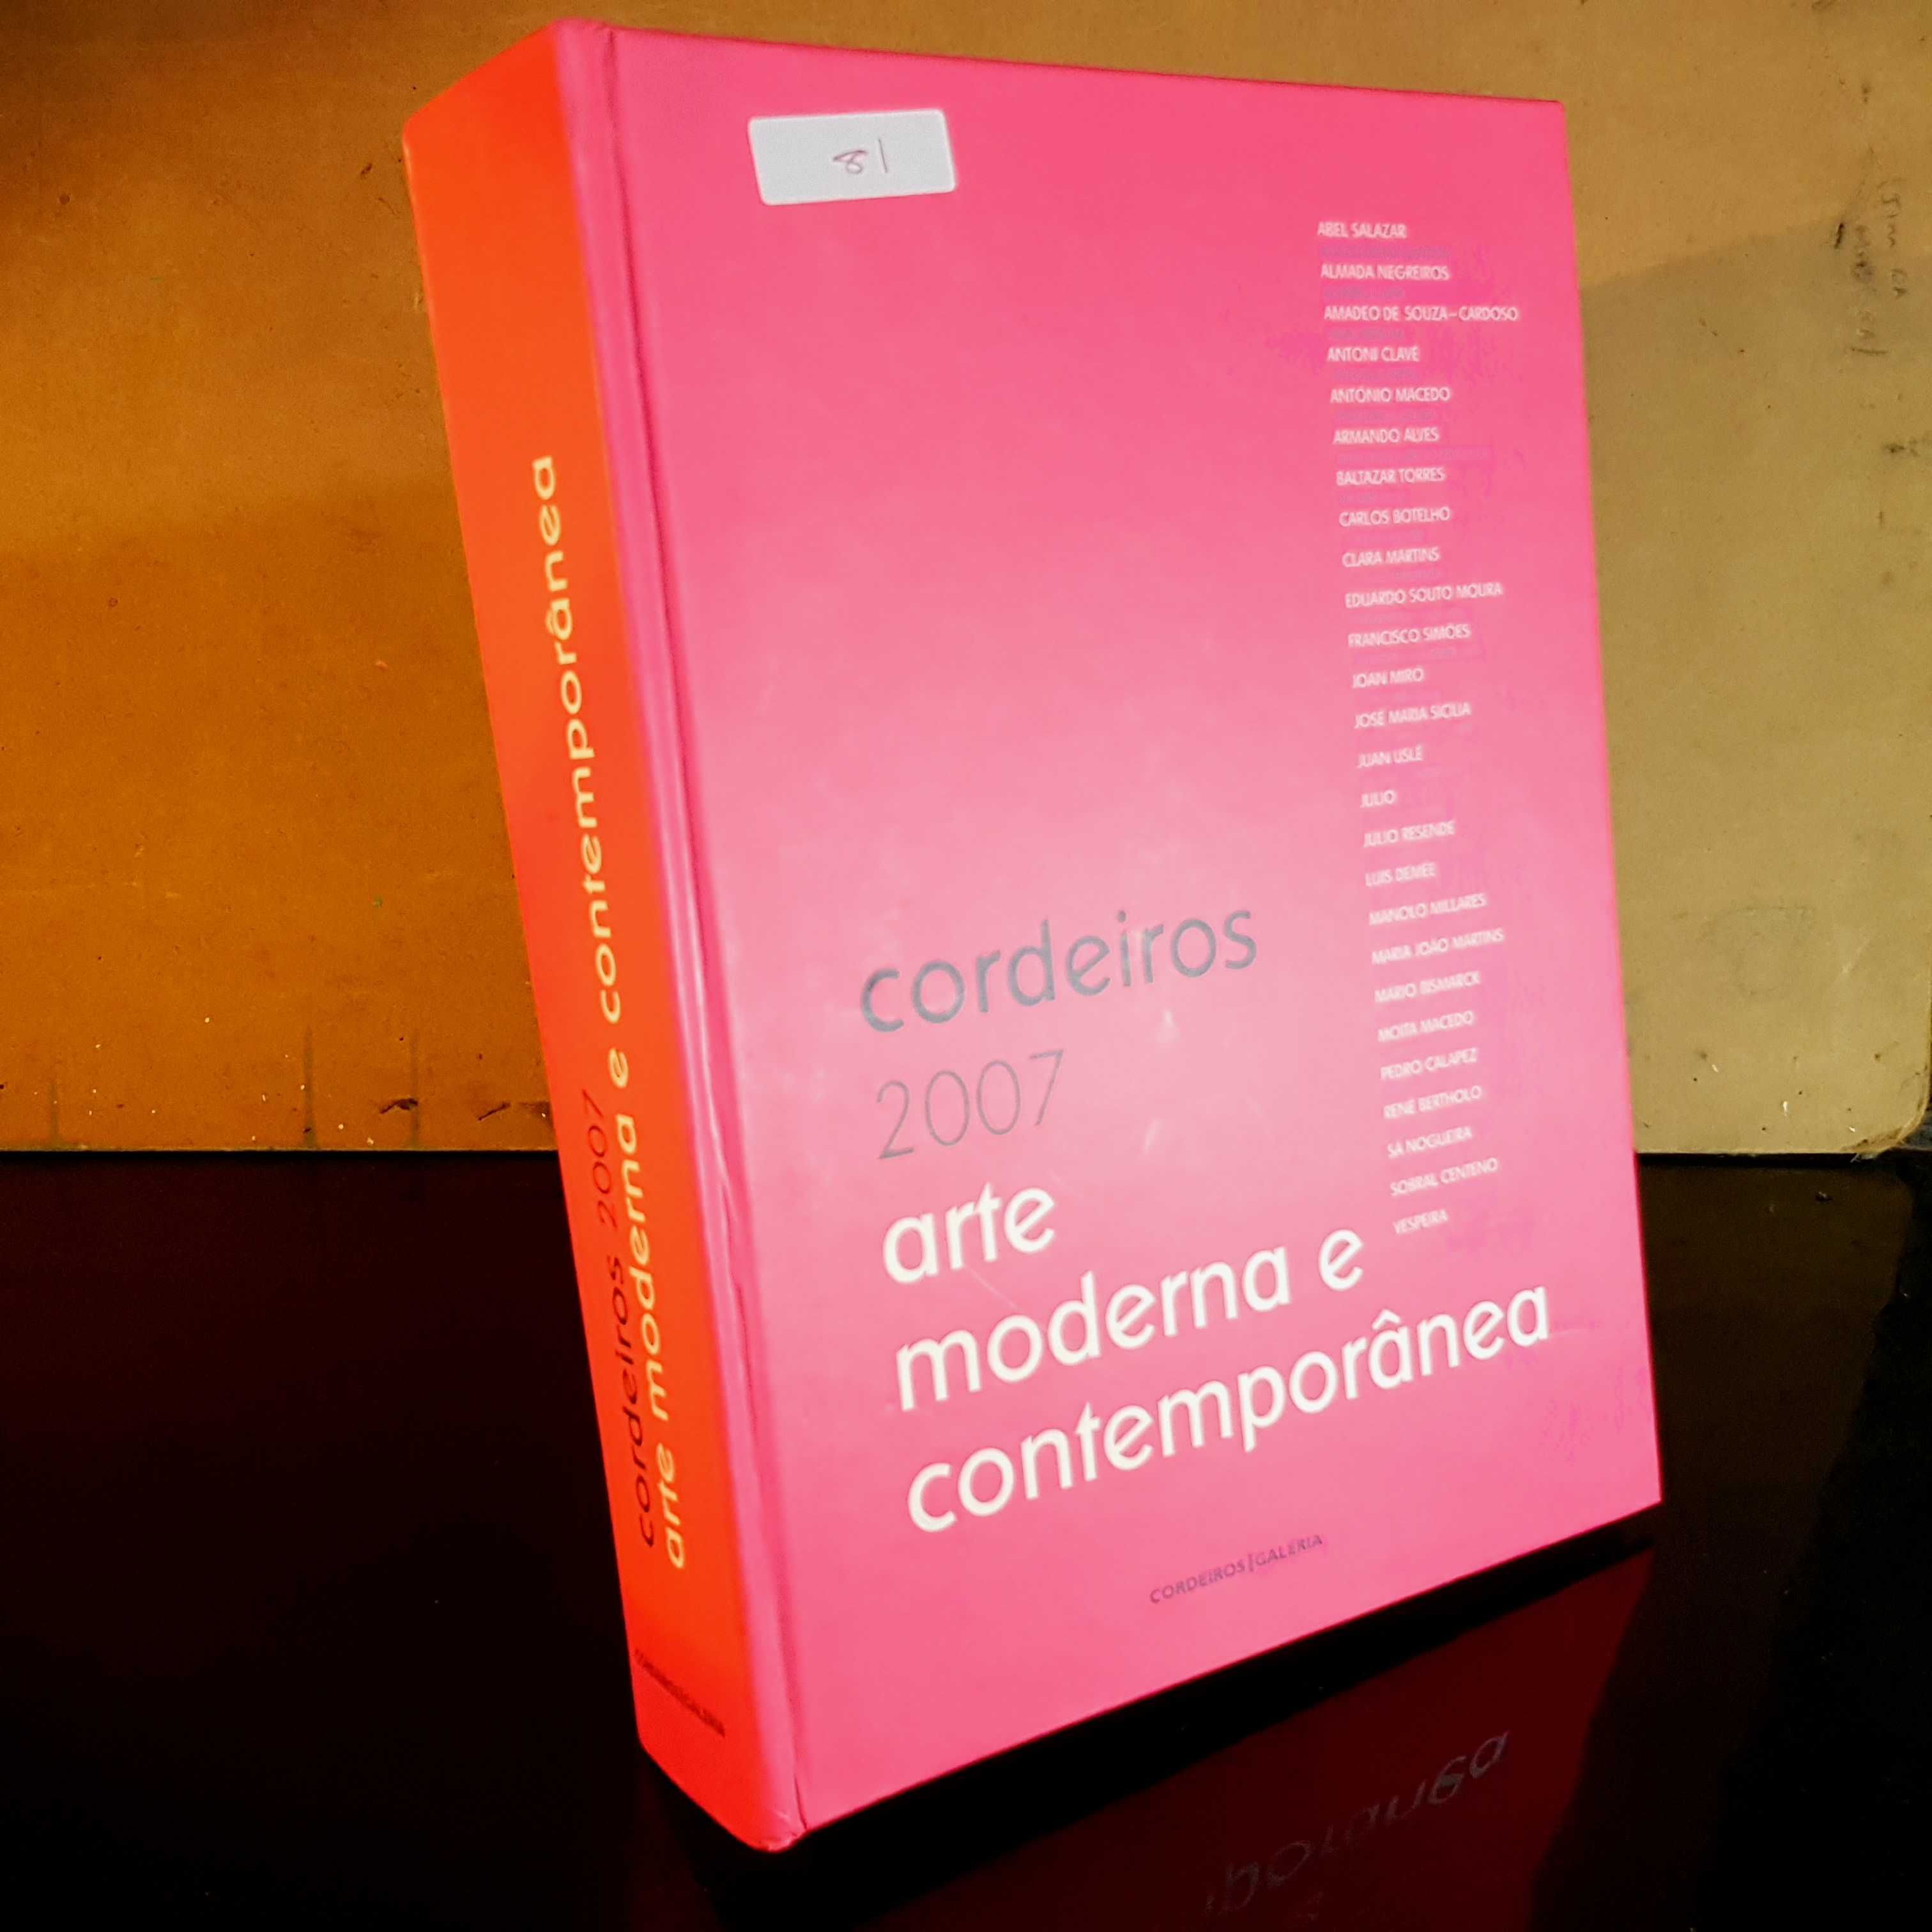 Cordeiros 2007 - Arte Moderna e Contemporânea